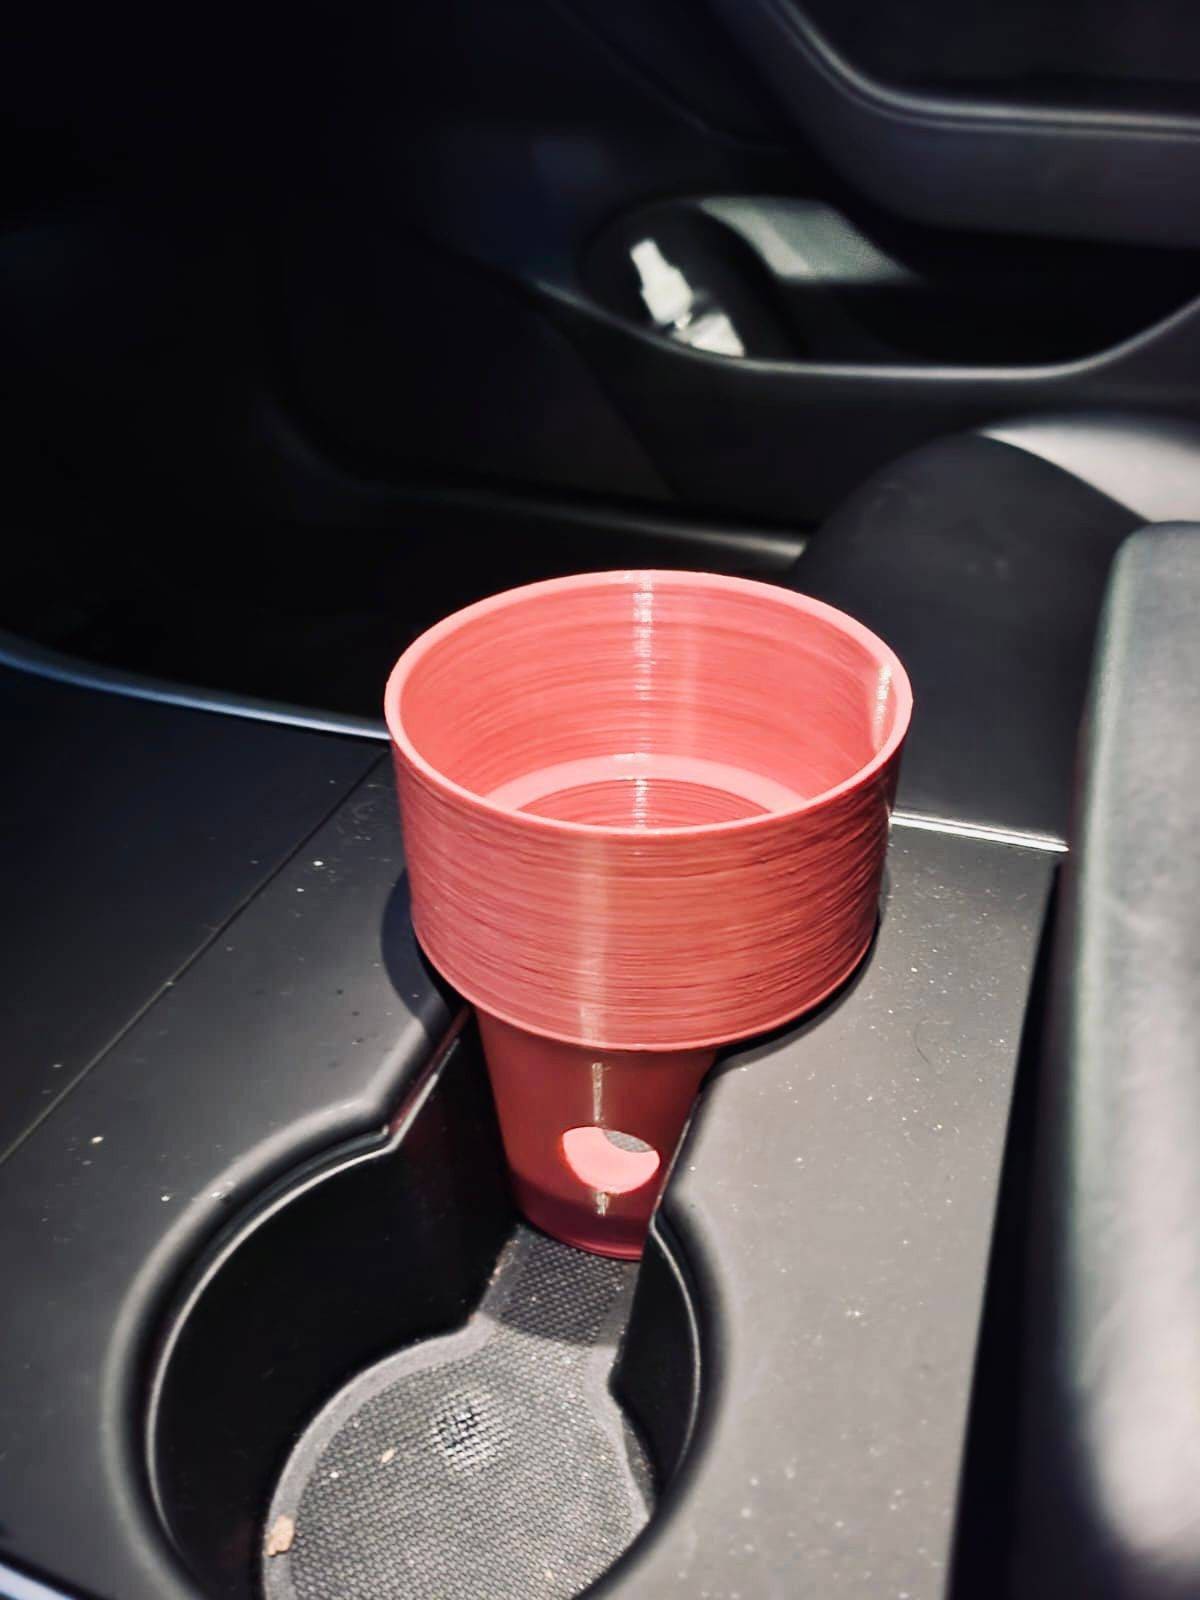 Tesla Hydroflask Car Cup Holder Adapter Fits 32oz or 40oz Water Bottles 